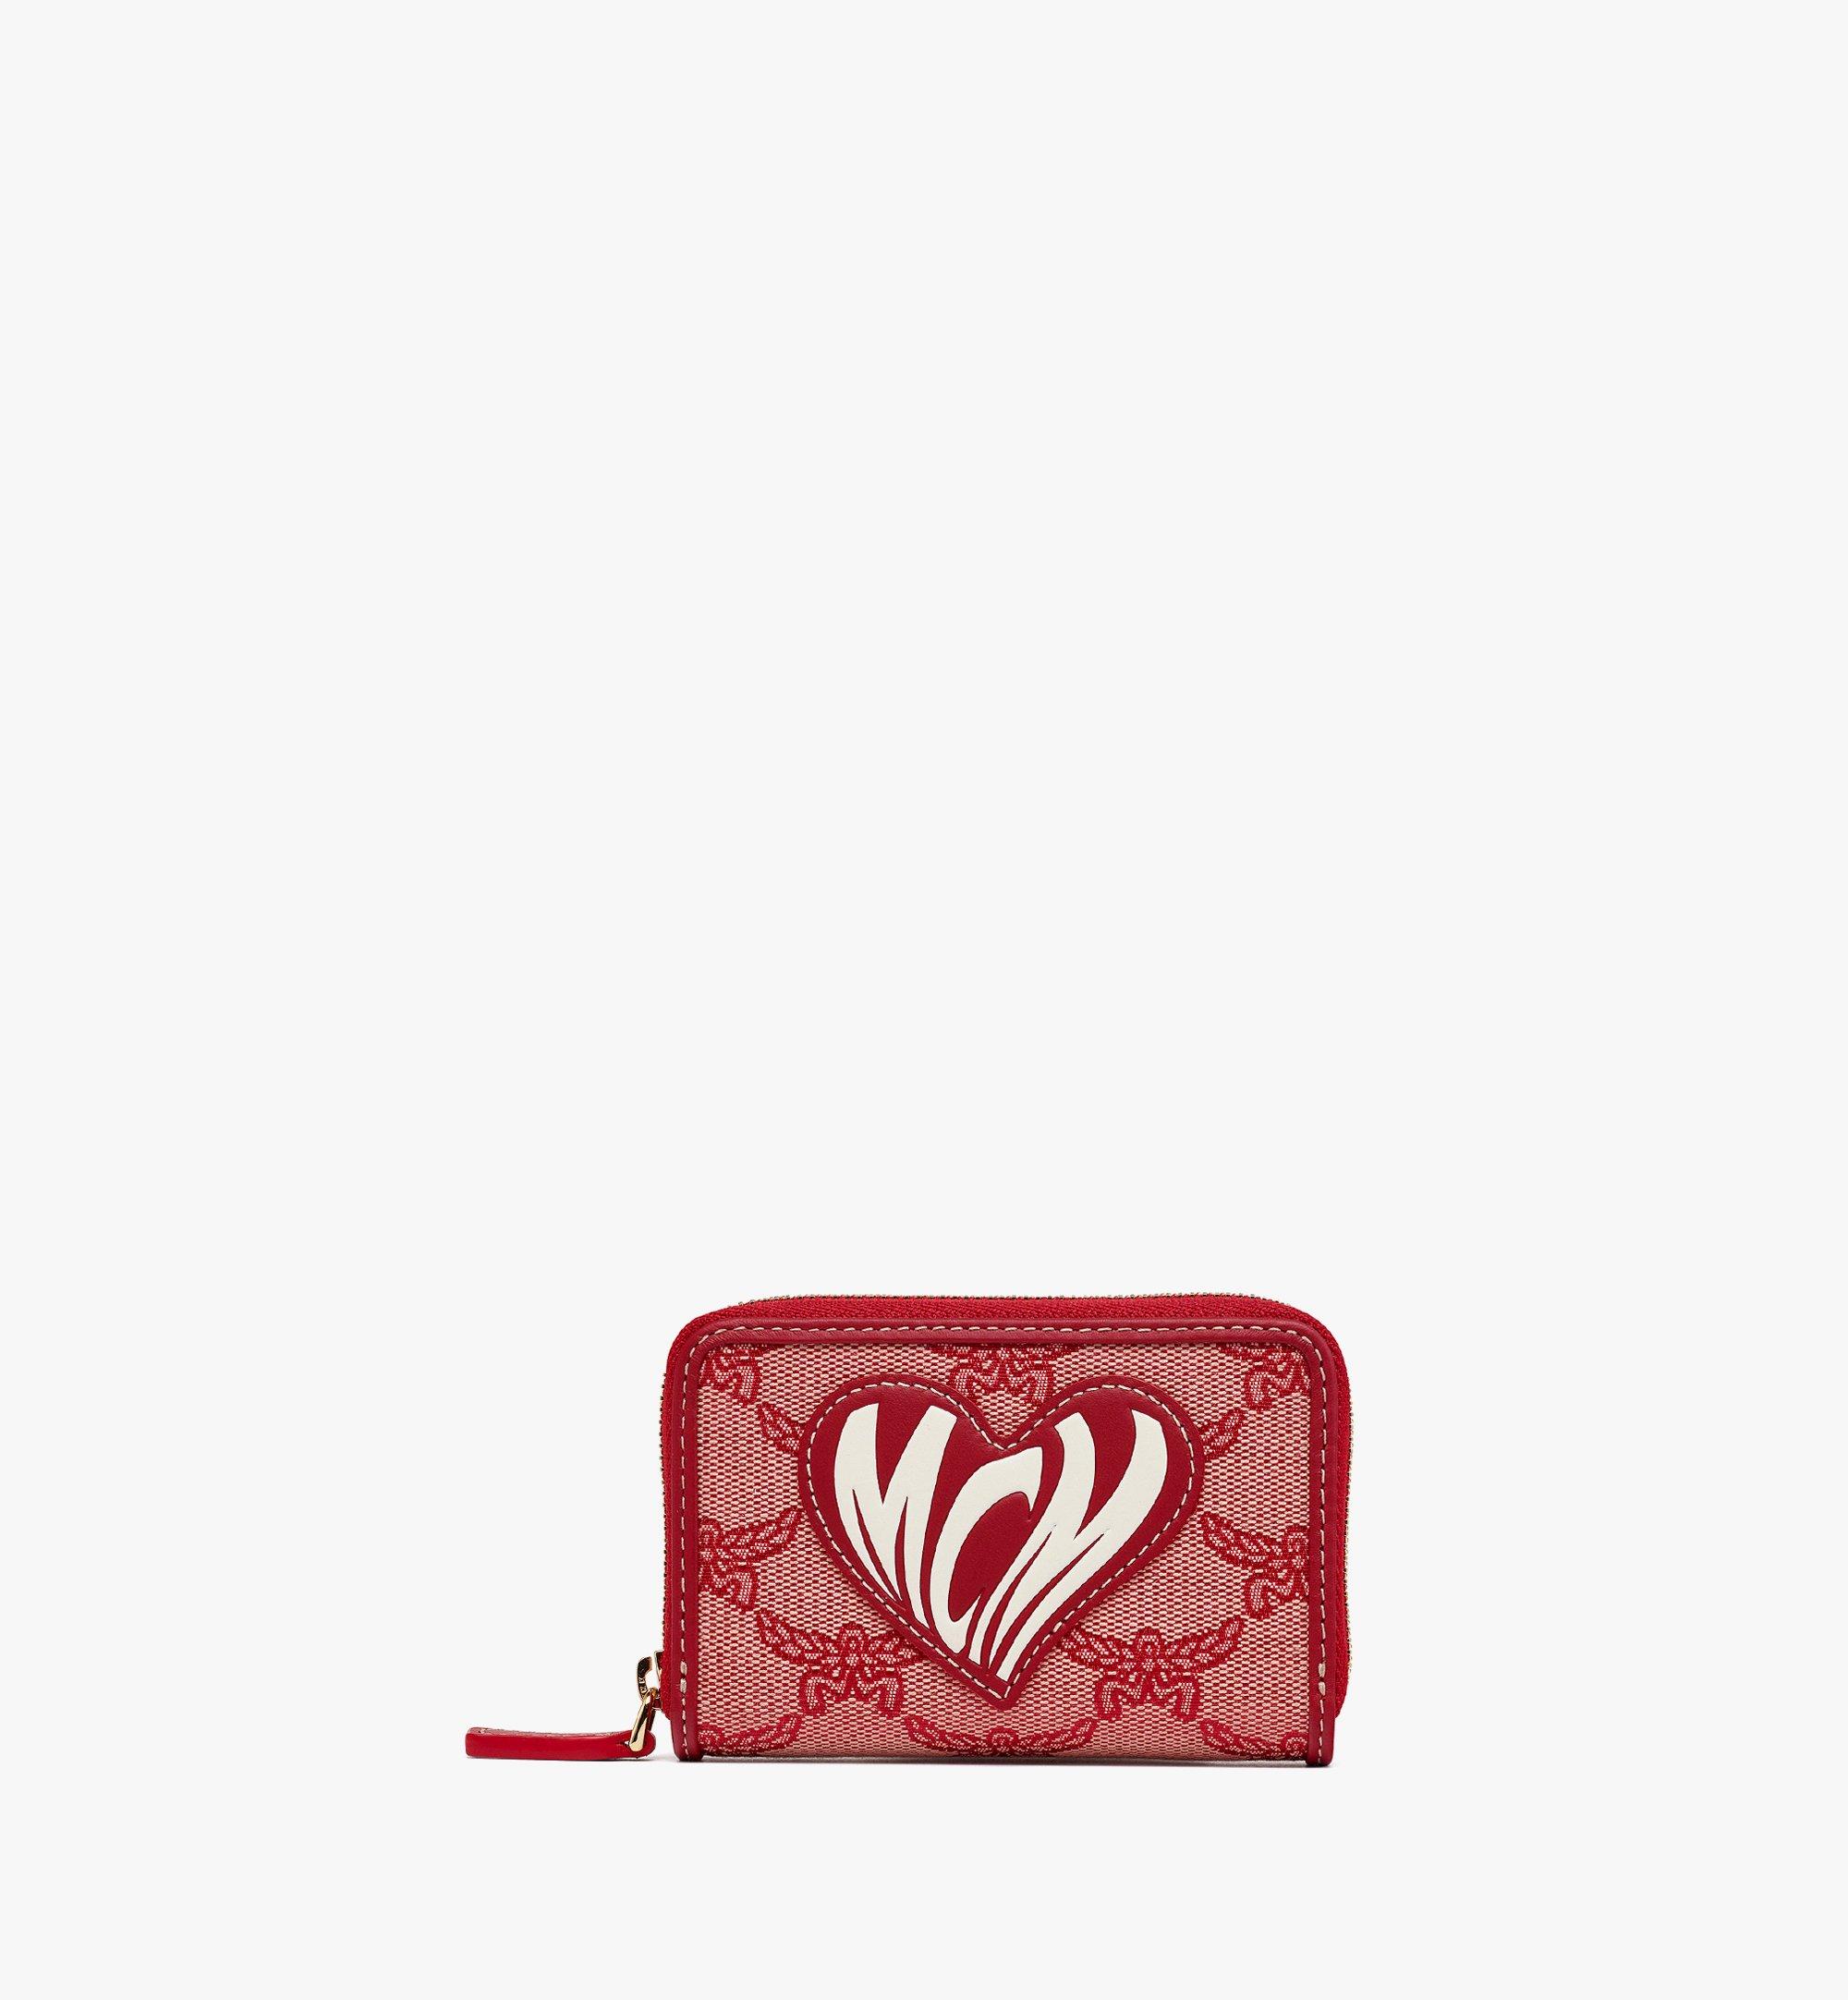 MCM กระเป๋าสตางค์ติดซิปรอบทำจากผ้าแจ็คการ์ดลาย Lauretos Red MYLESAC05X0001 มุมมองอื่น 1